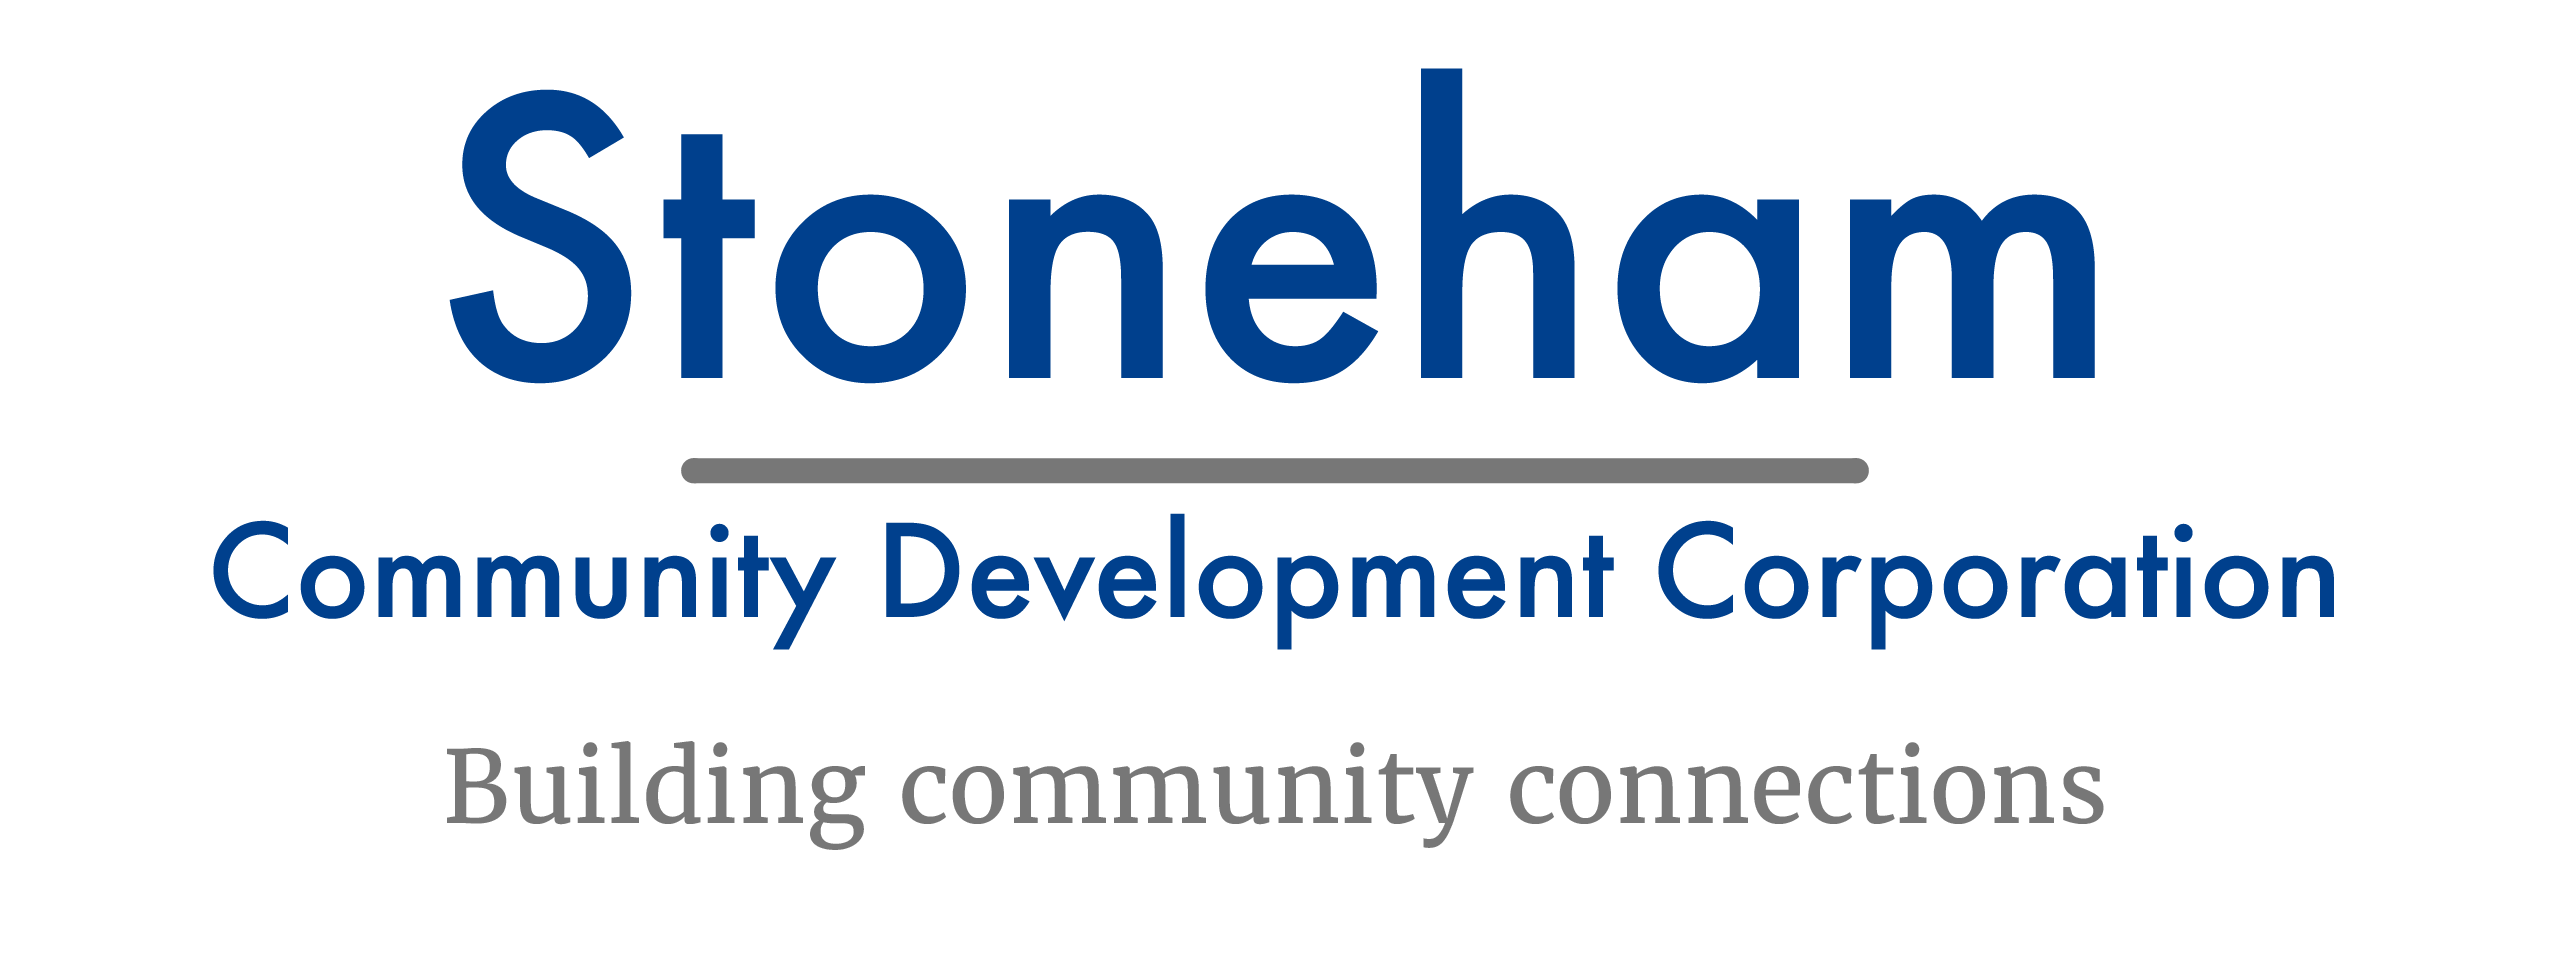 Stoneham Community Development Corporation logo